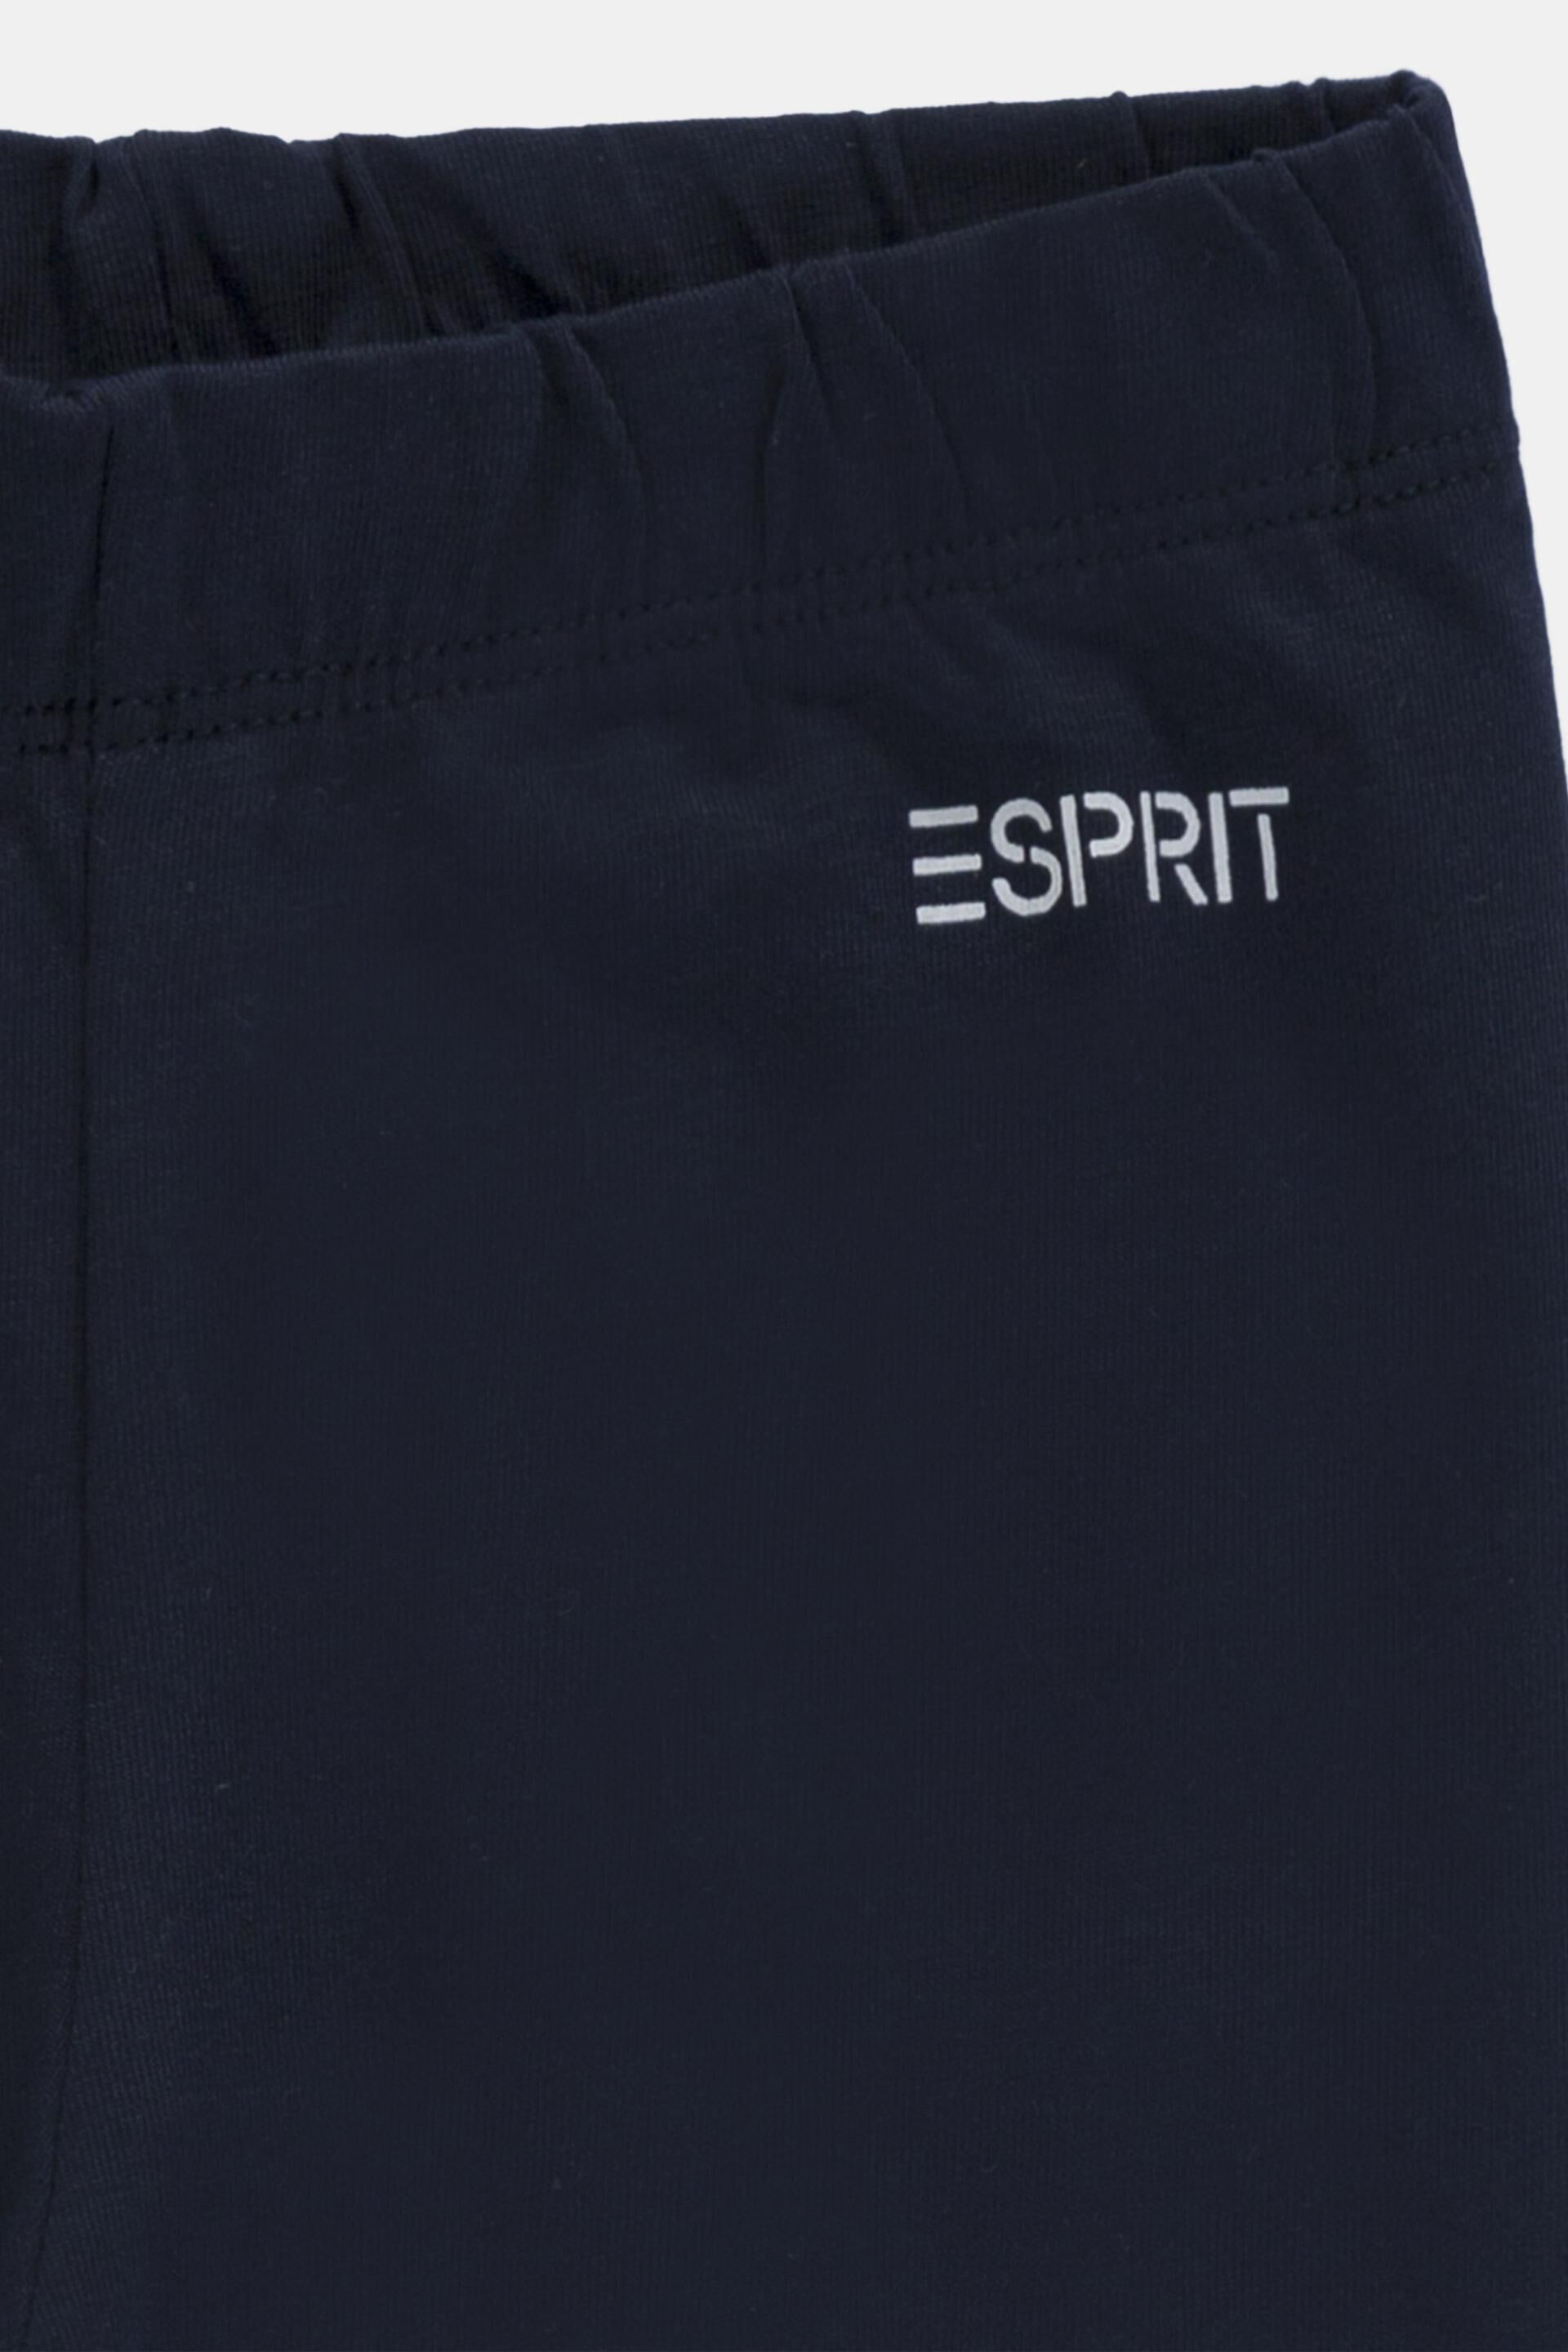 Esprit Outlet Leggings aus Stretch-Baumwolle